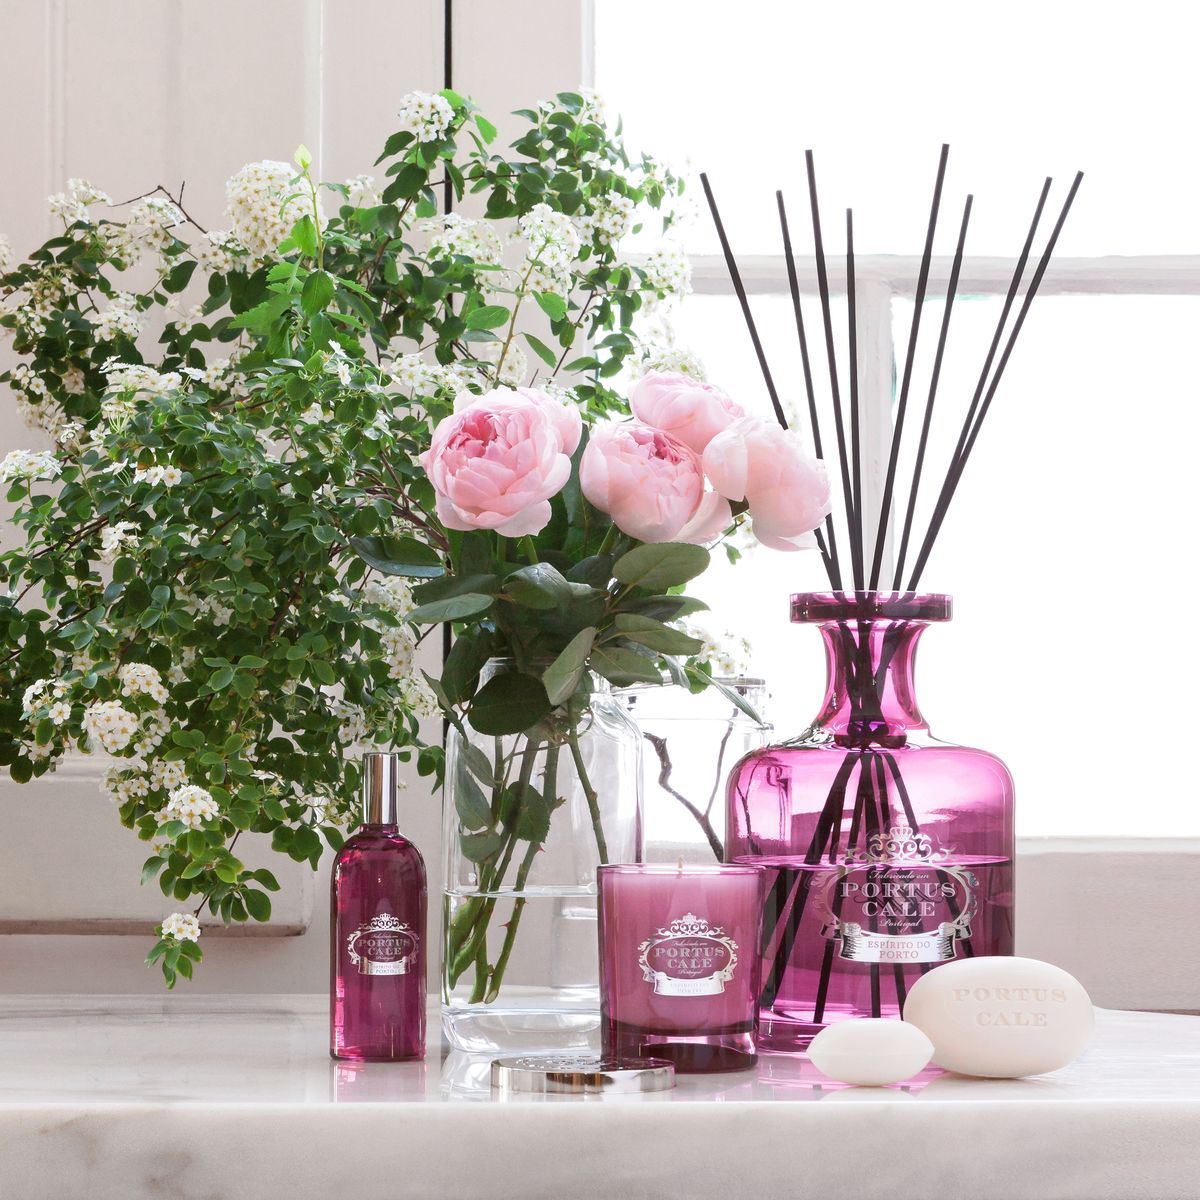 Buy Portus Cale Black Orchid Room Fragrance diffuser 2l bottle